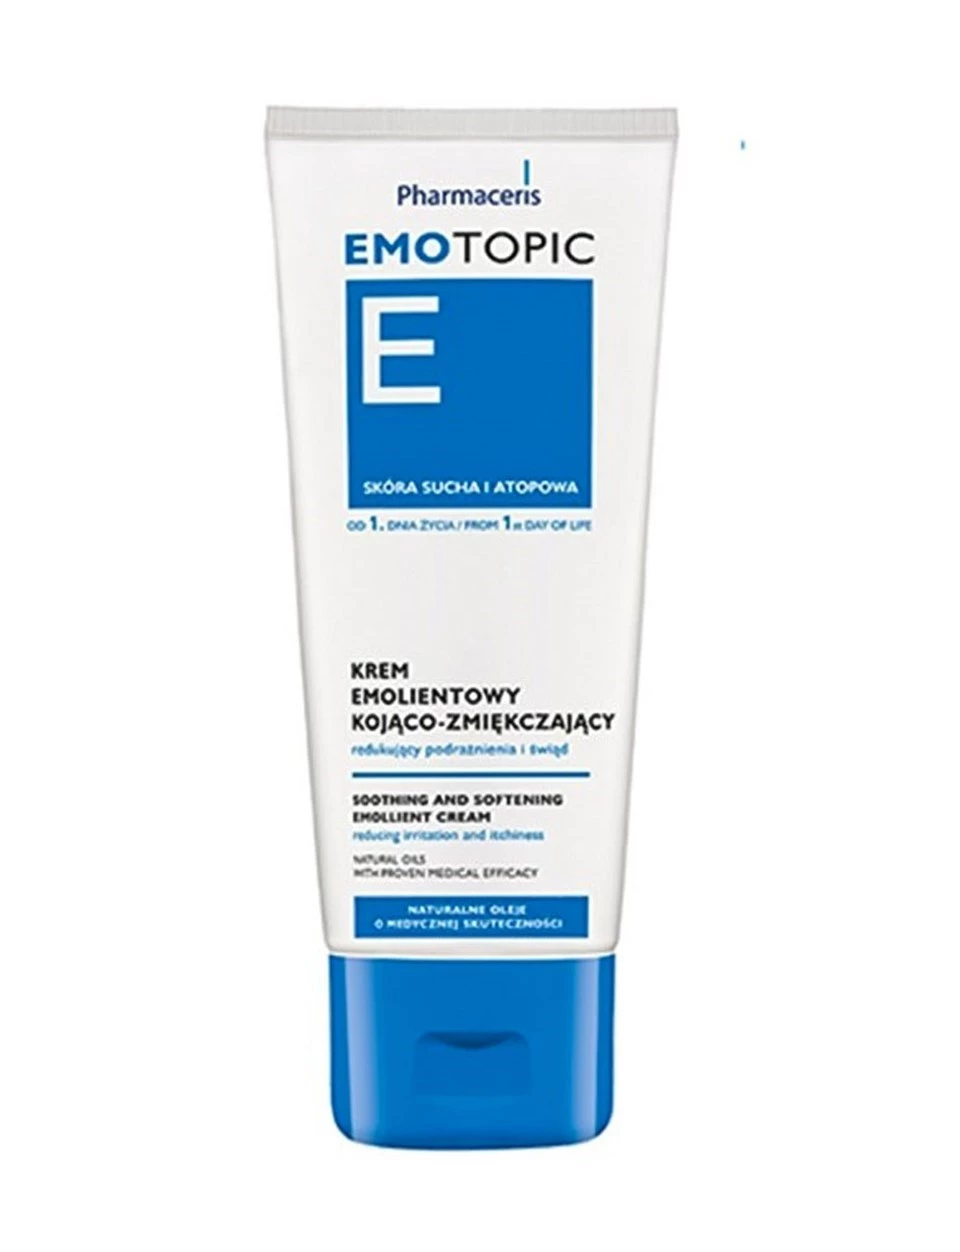 Pharmaceris Emotopic Soothing And Softening Body Emollient Cream 200ml